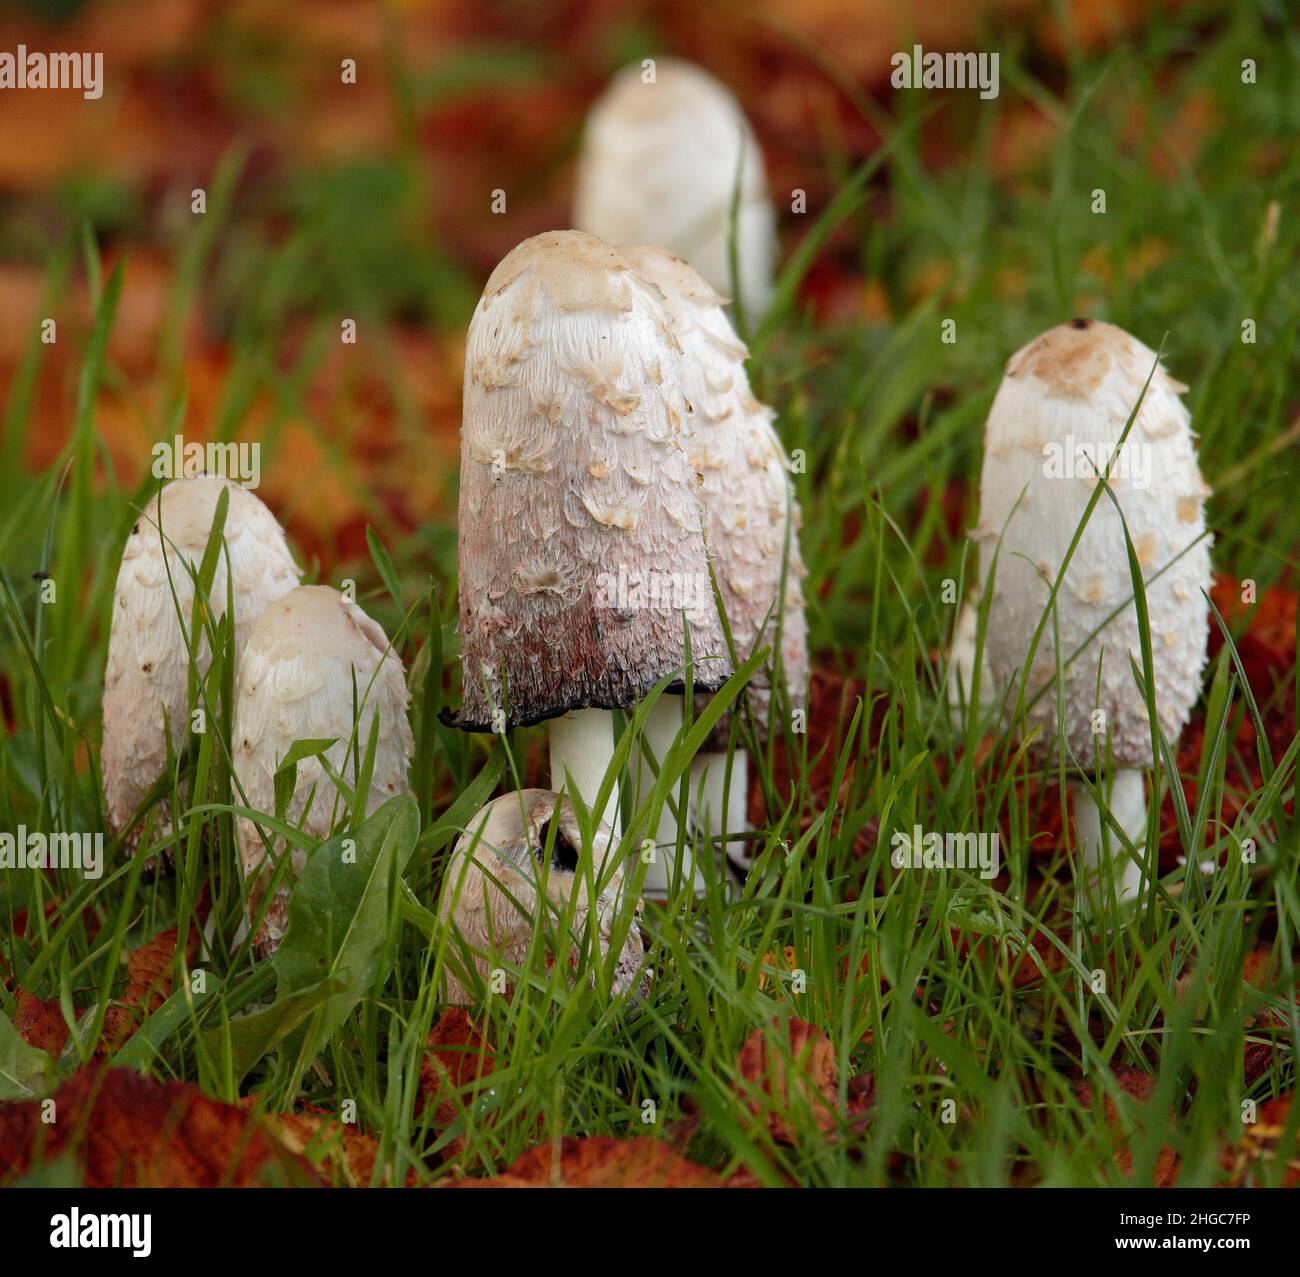 Shaggy Ink Cap Mushroom Stock Photo